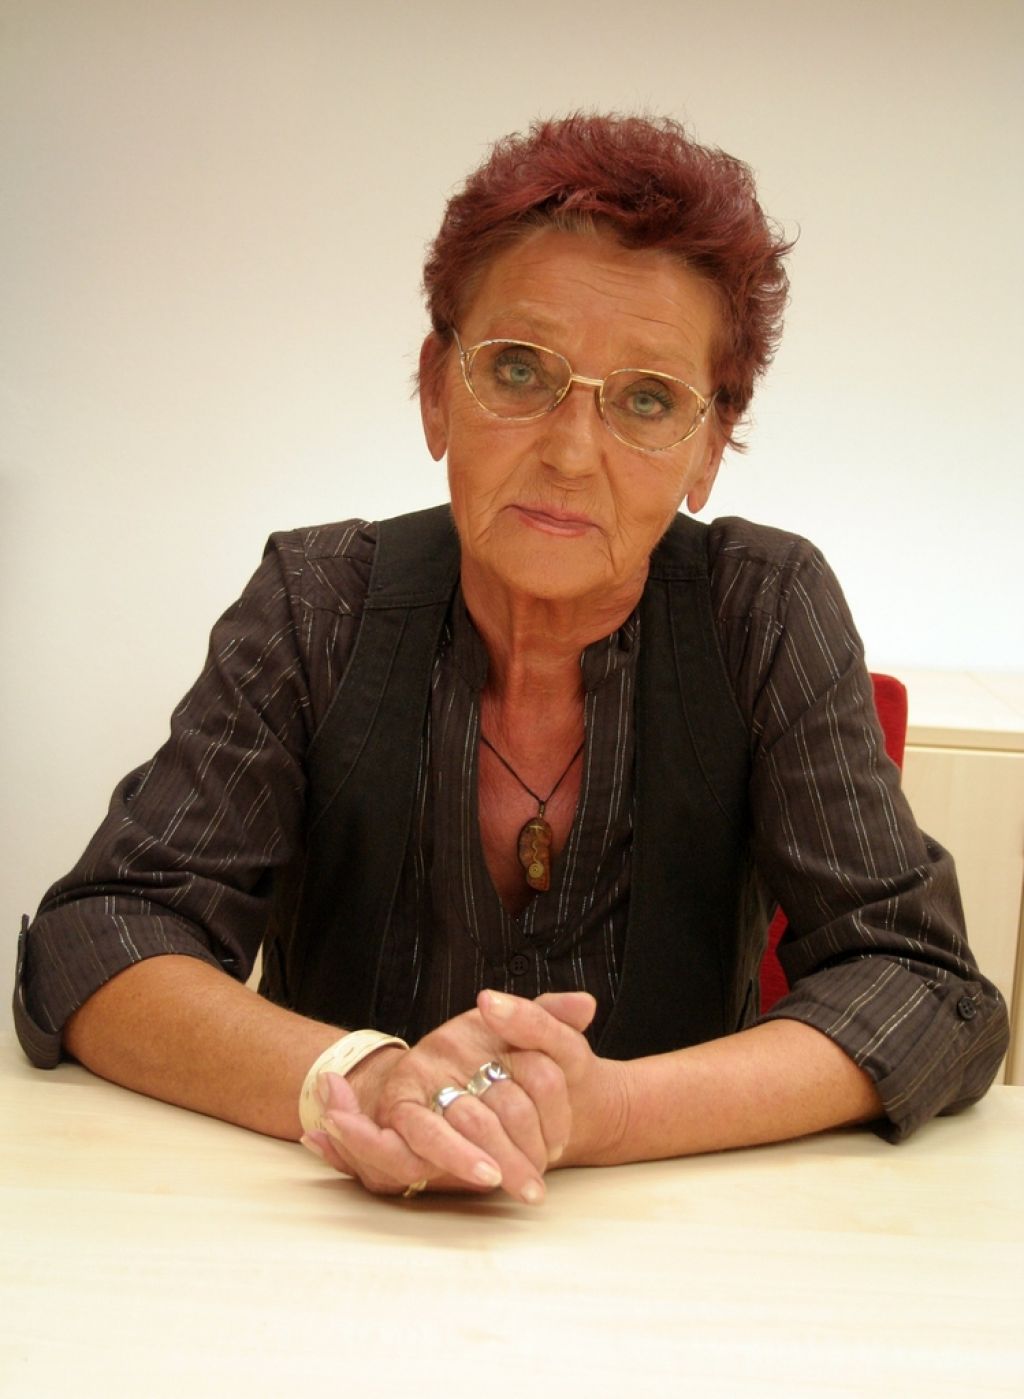 Umrla je pisateljica Anita Hudl